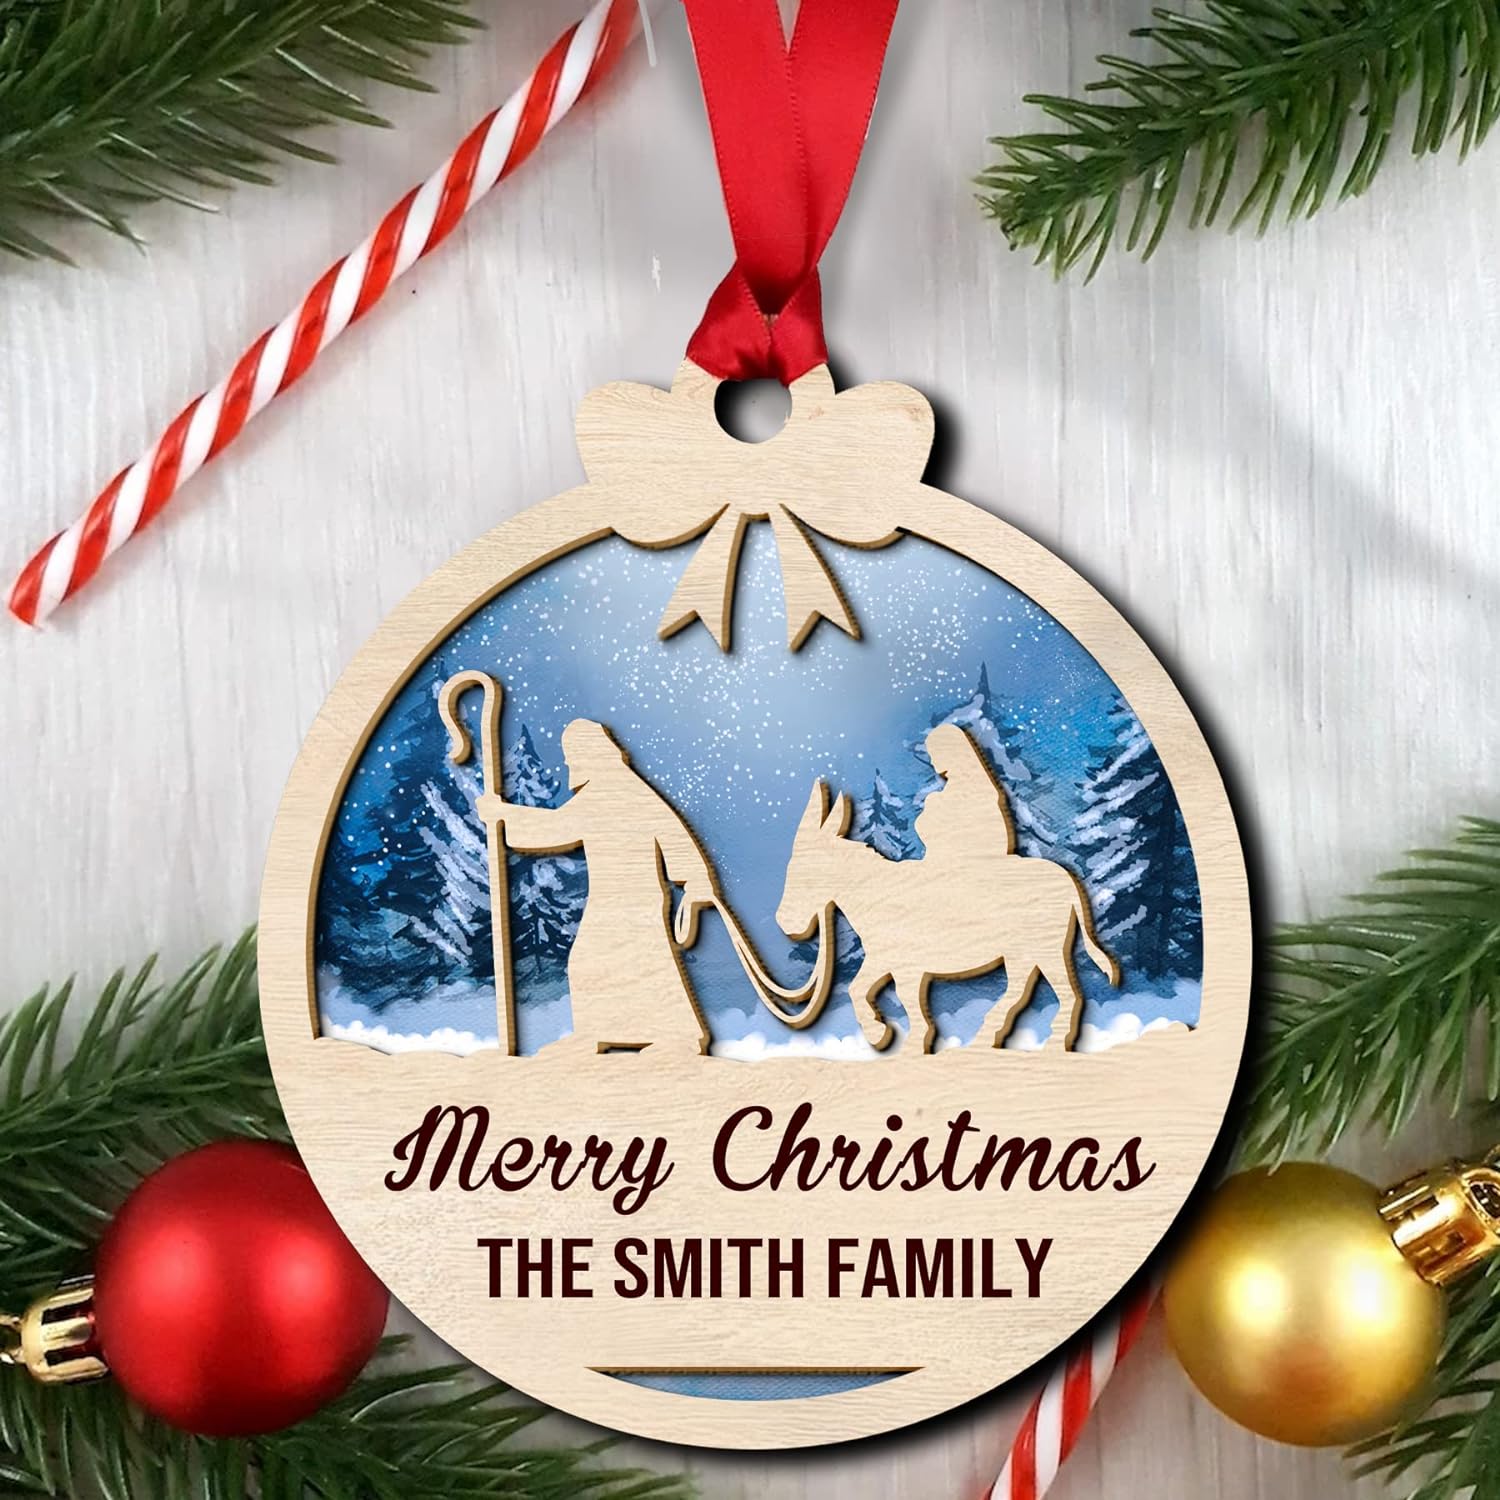 Personalized Nativity Scene Christmas Wood Layered Ornaments - Personalized Ornaments for Christmas Tree Decorations